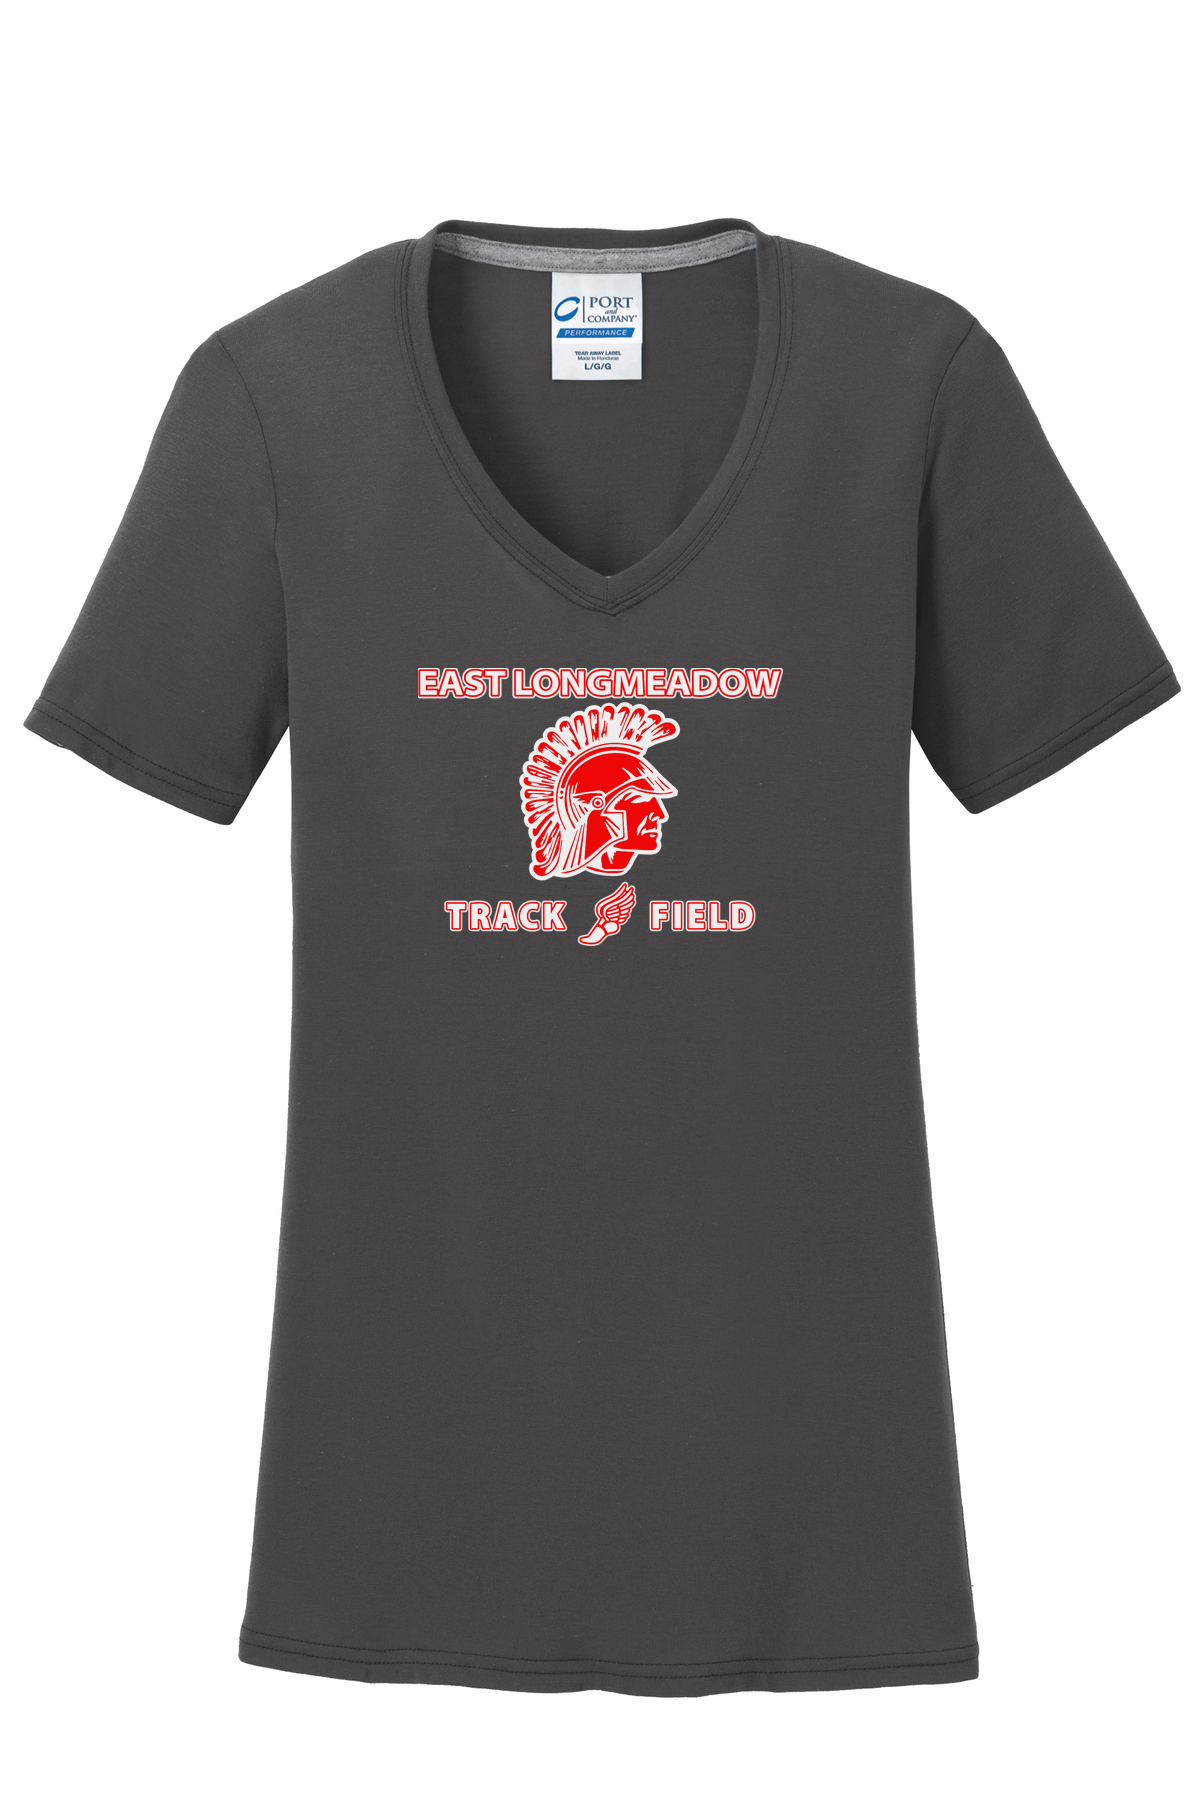 East Longmeadow Track and Field Women's Charcoal T-Shirt